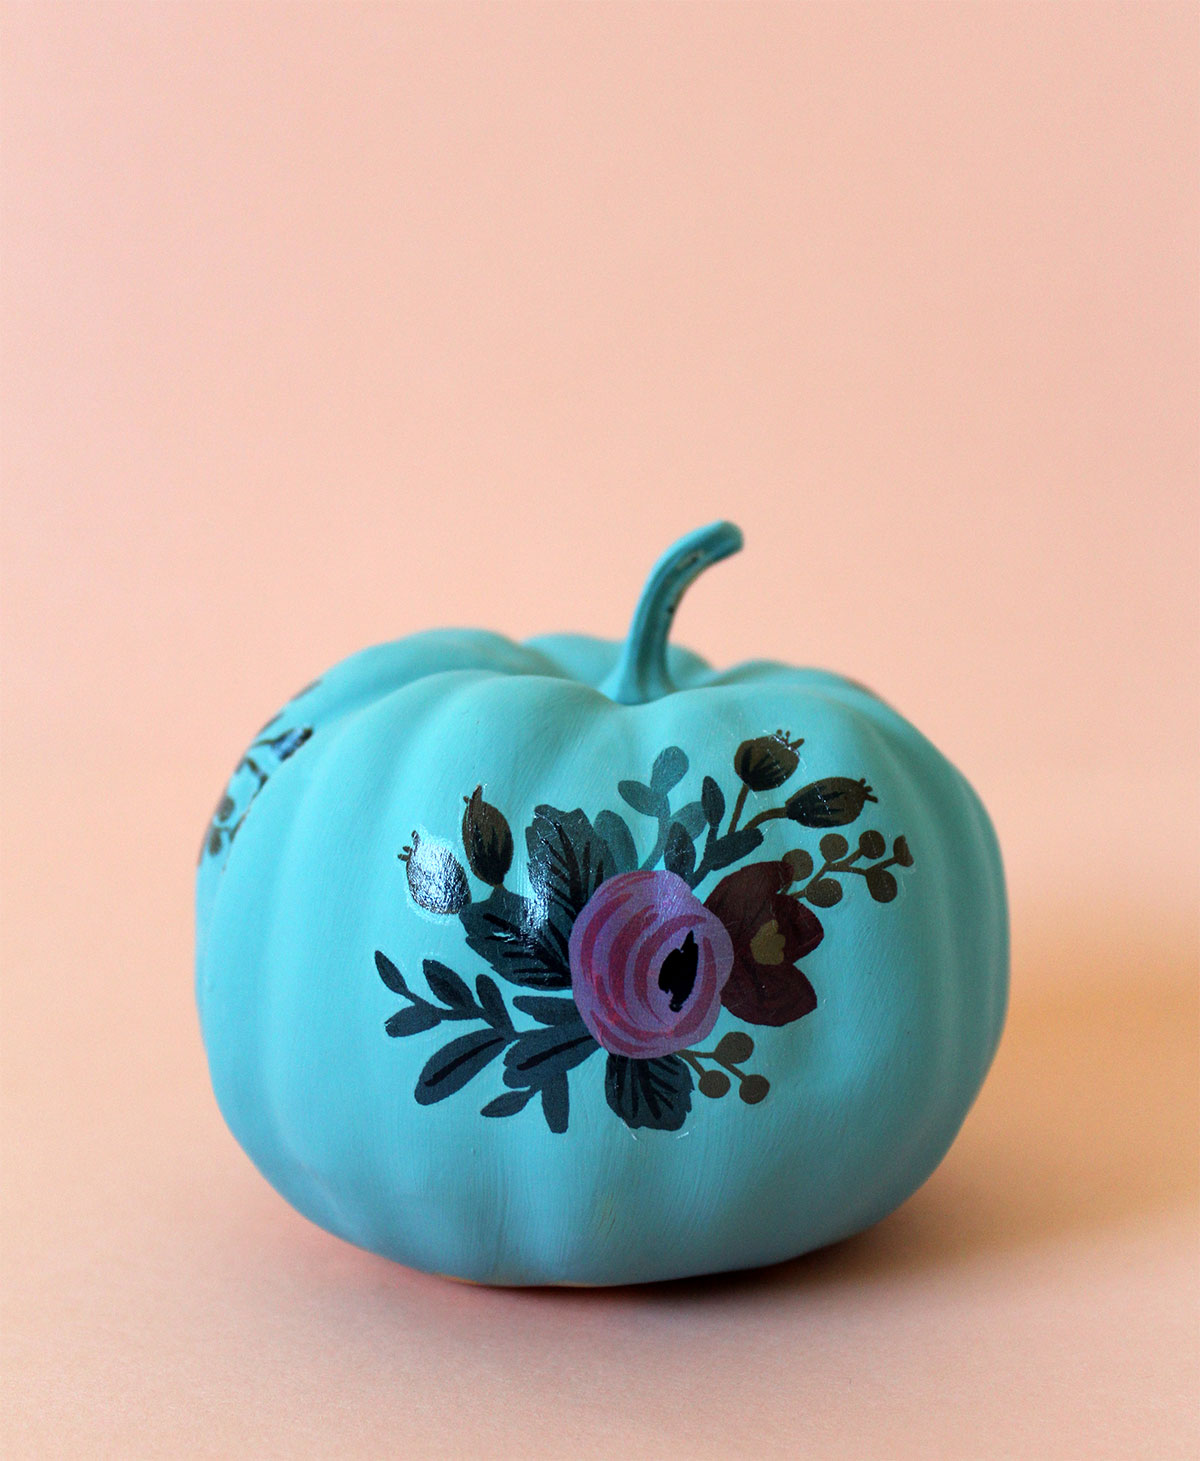 DIY vibrant floral pumpkin with tattoos (via kraftmint.com)